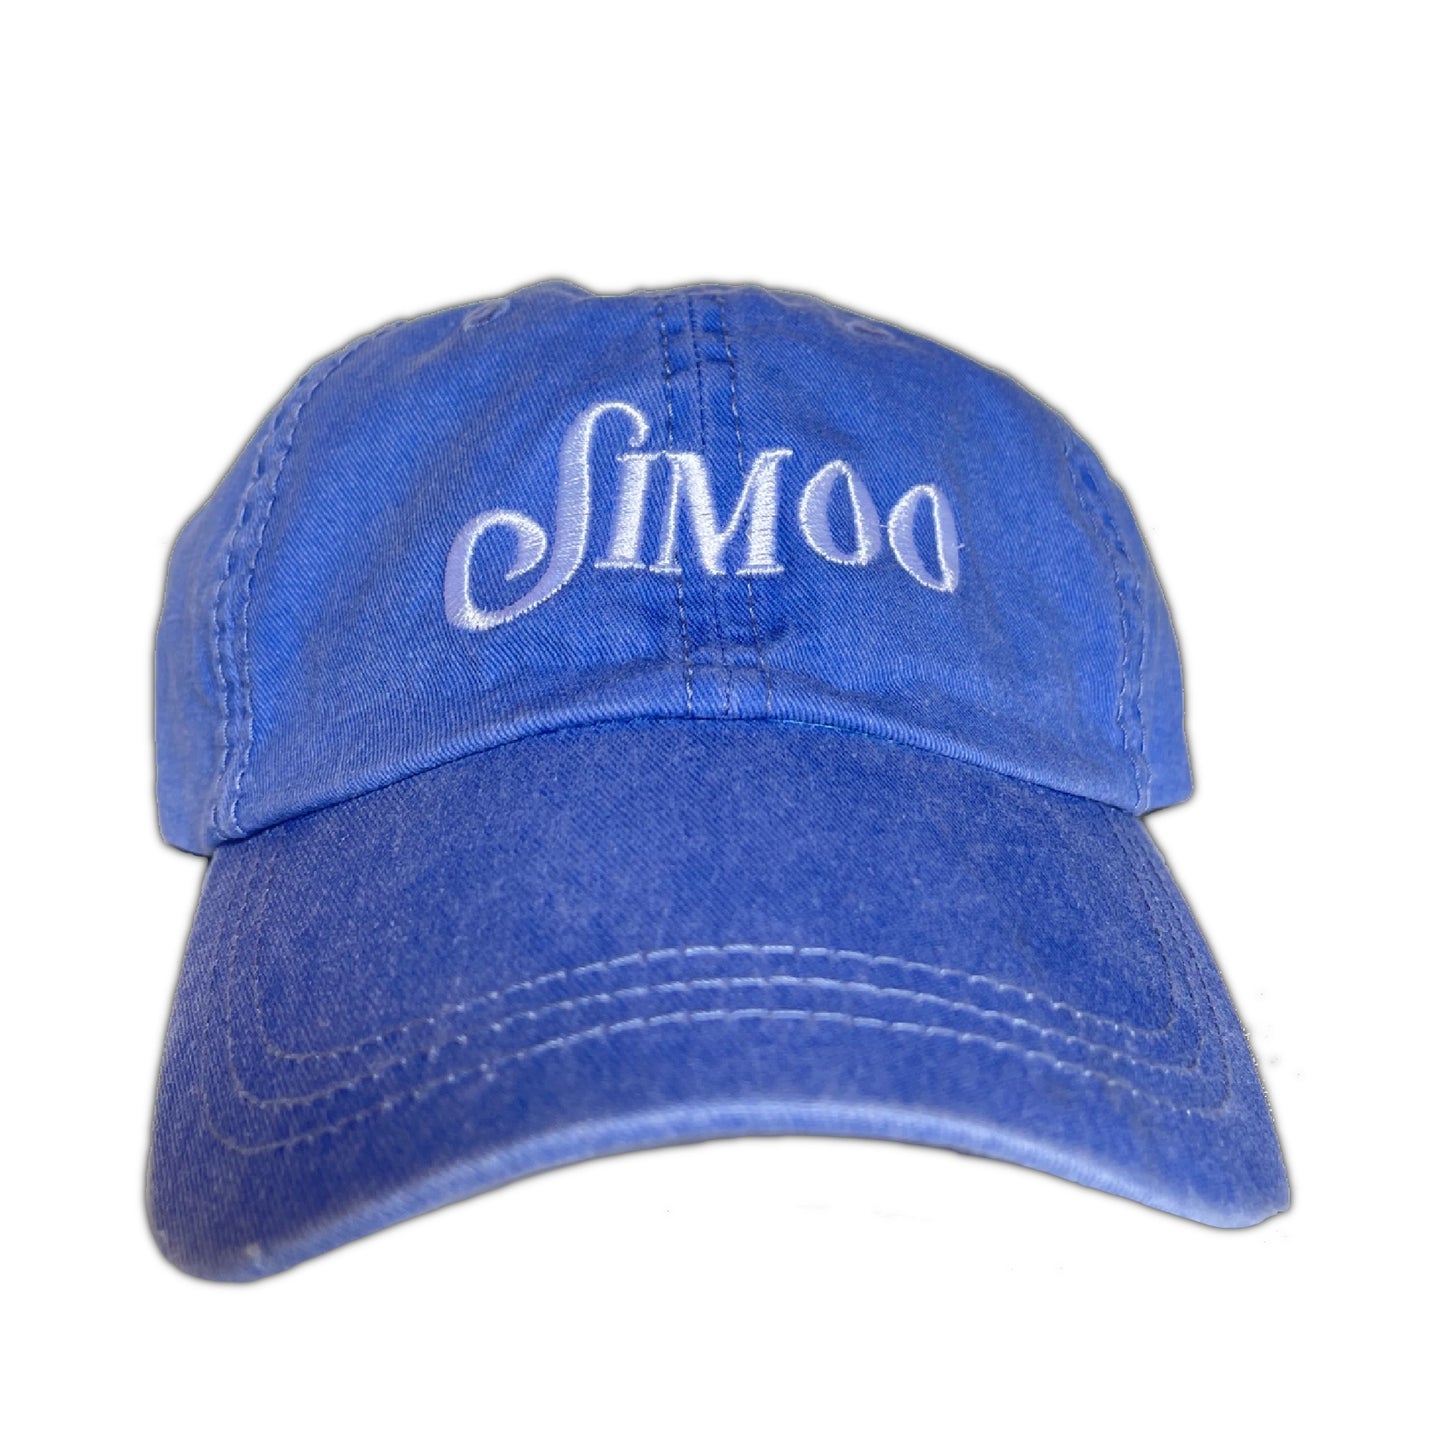 Simoo Denim Dad Hat